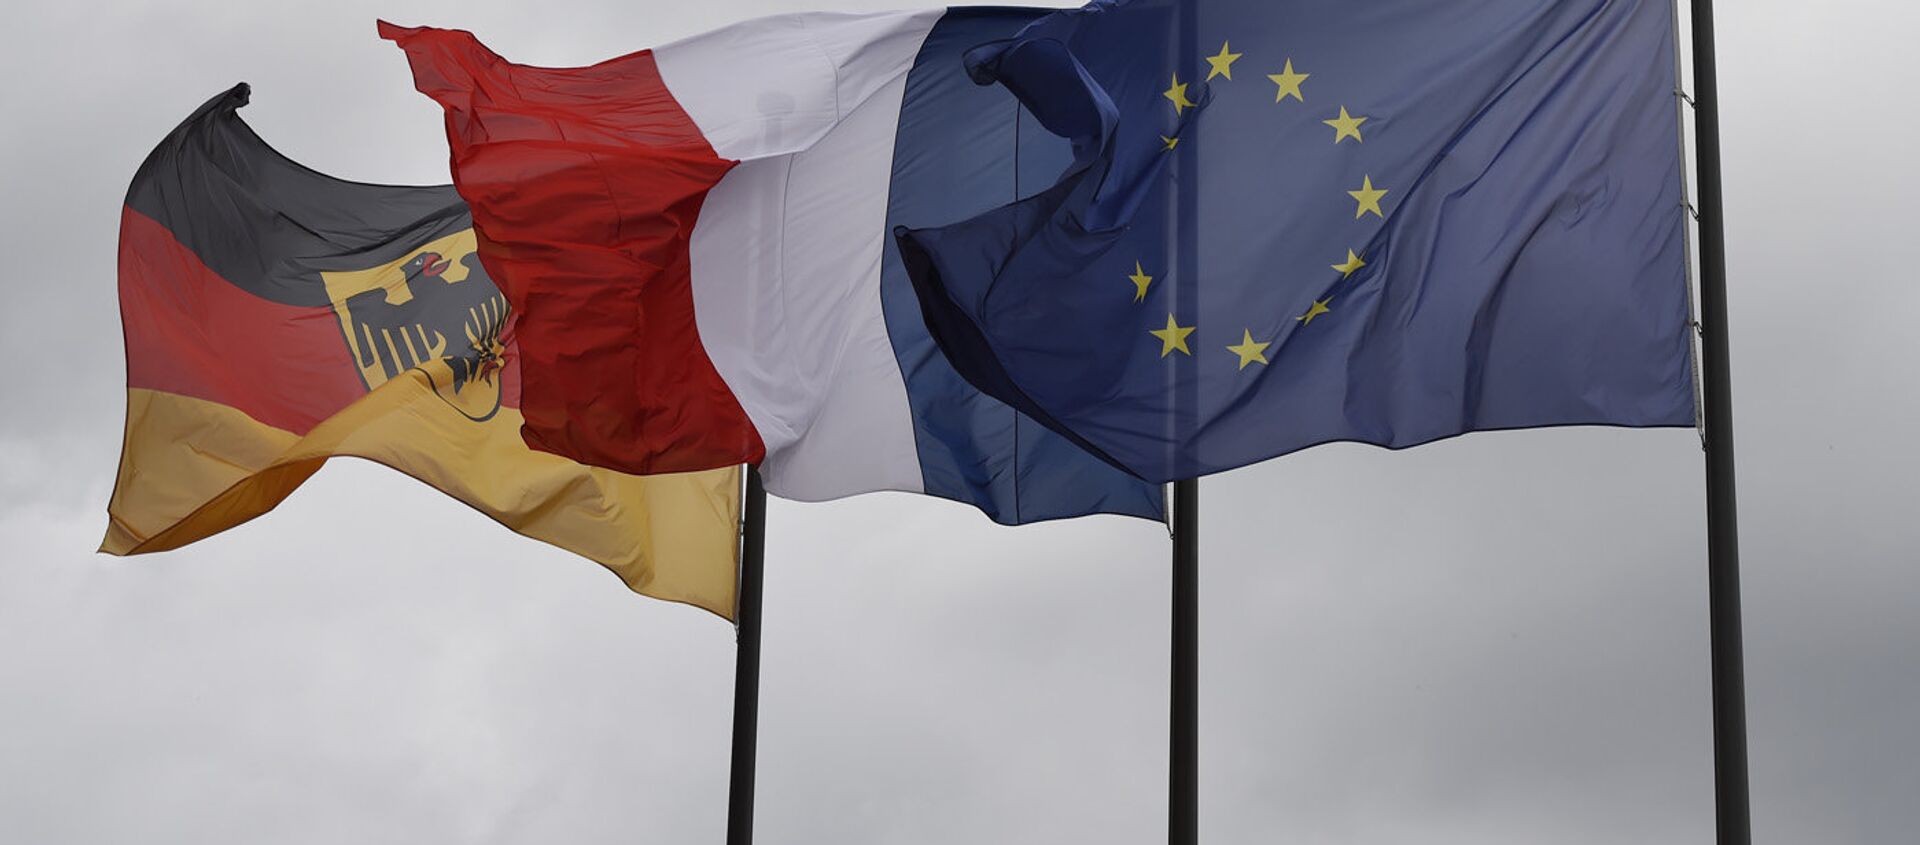 Флаги Германии, Франции и ЕС - Sputnik Latvija, 1920, 05.04.2017